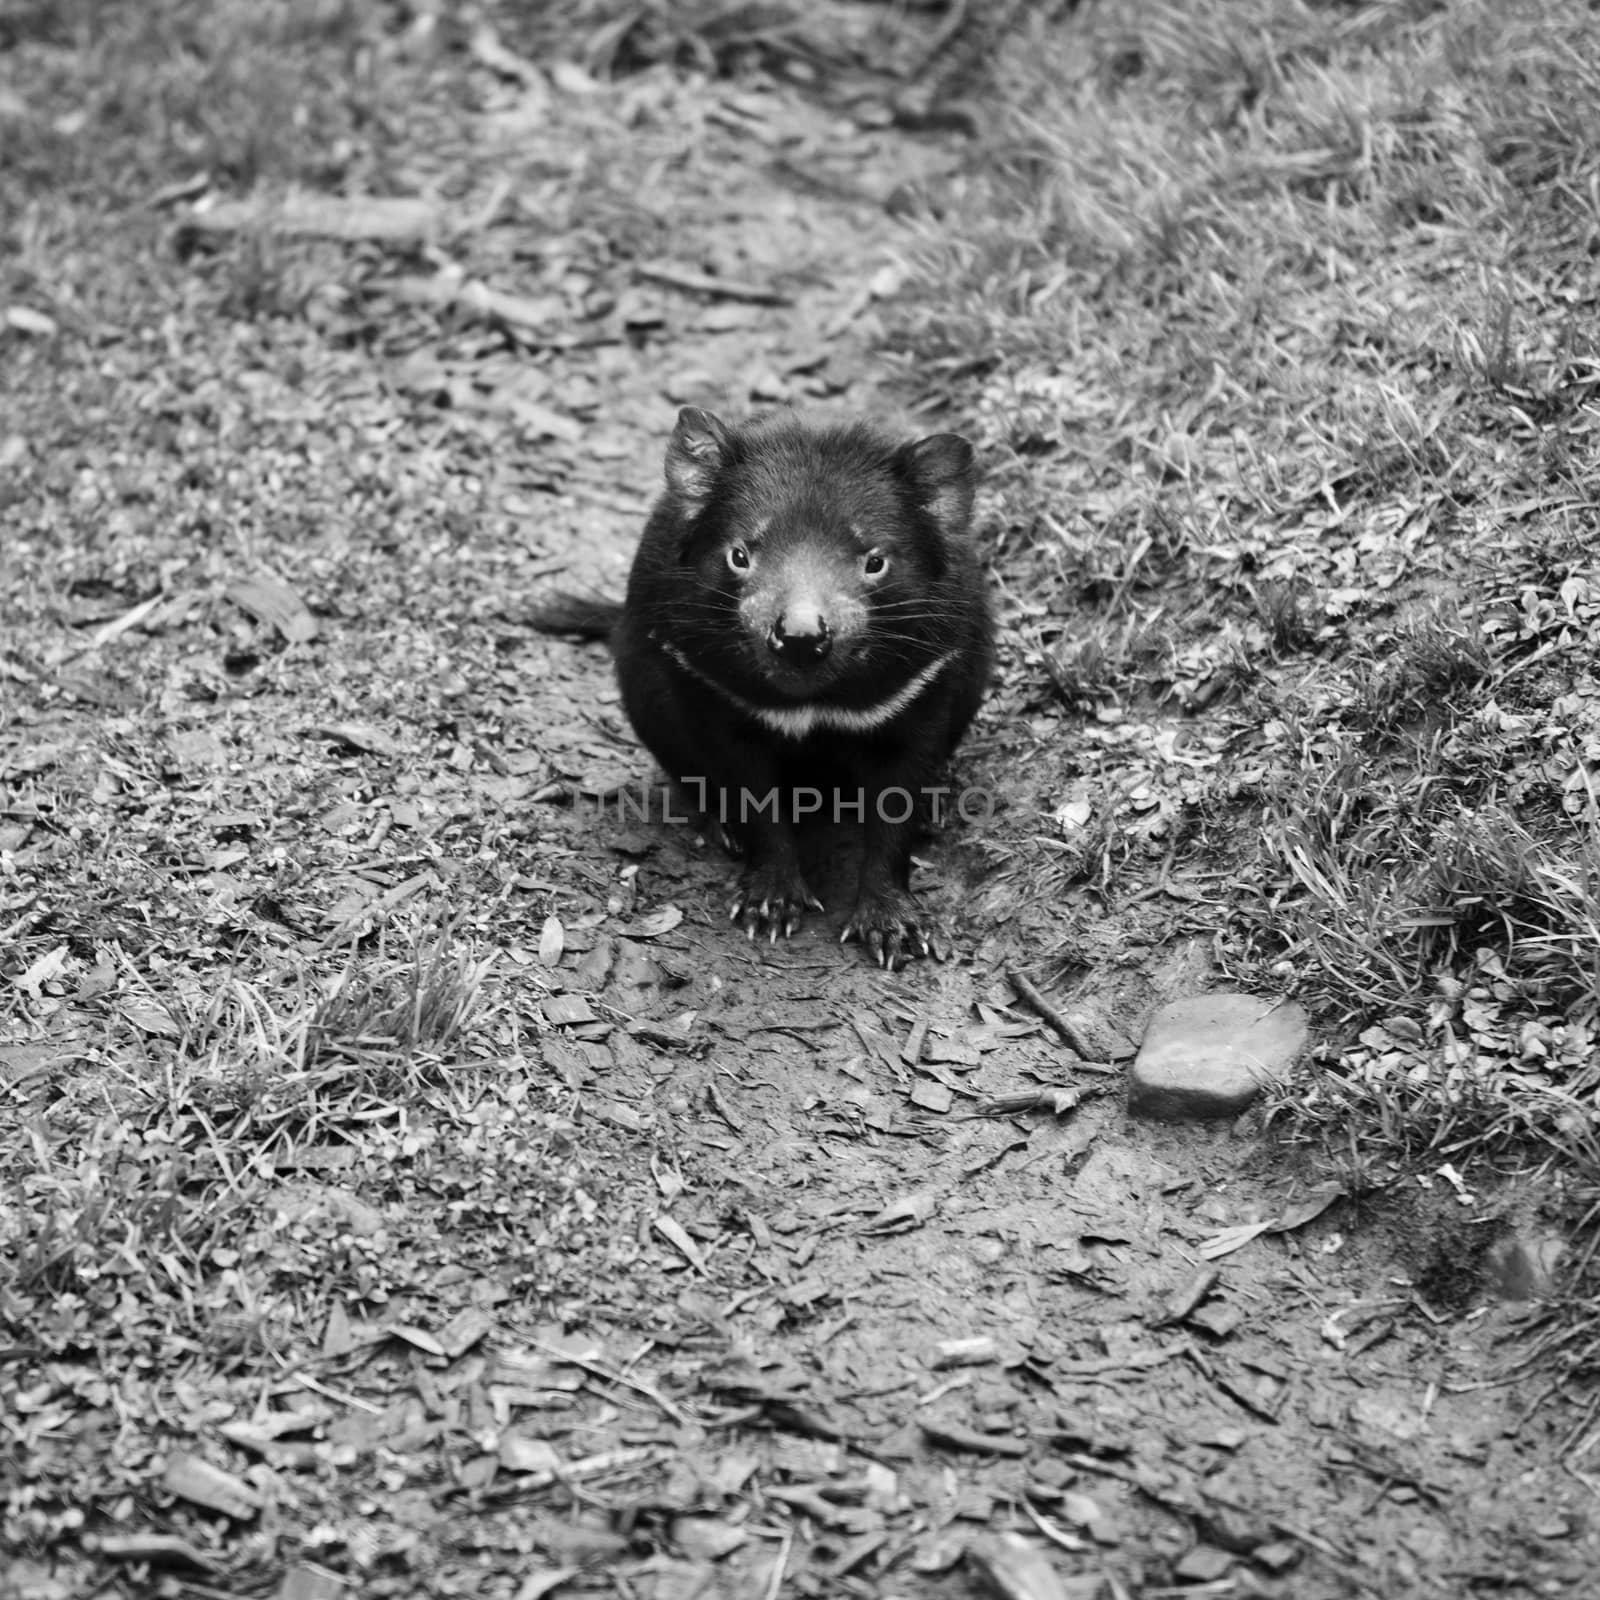 Tasmanian Devil during the day found in Hobart, Tasmania.